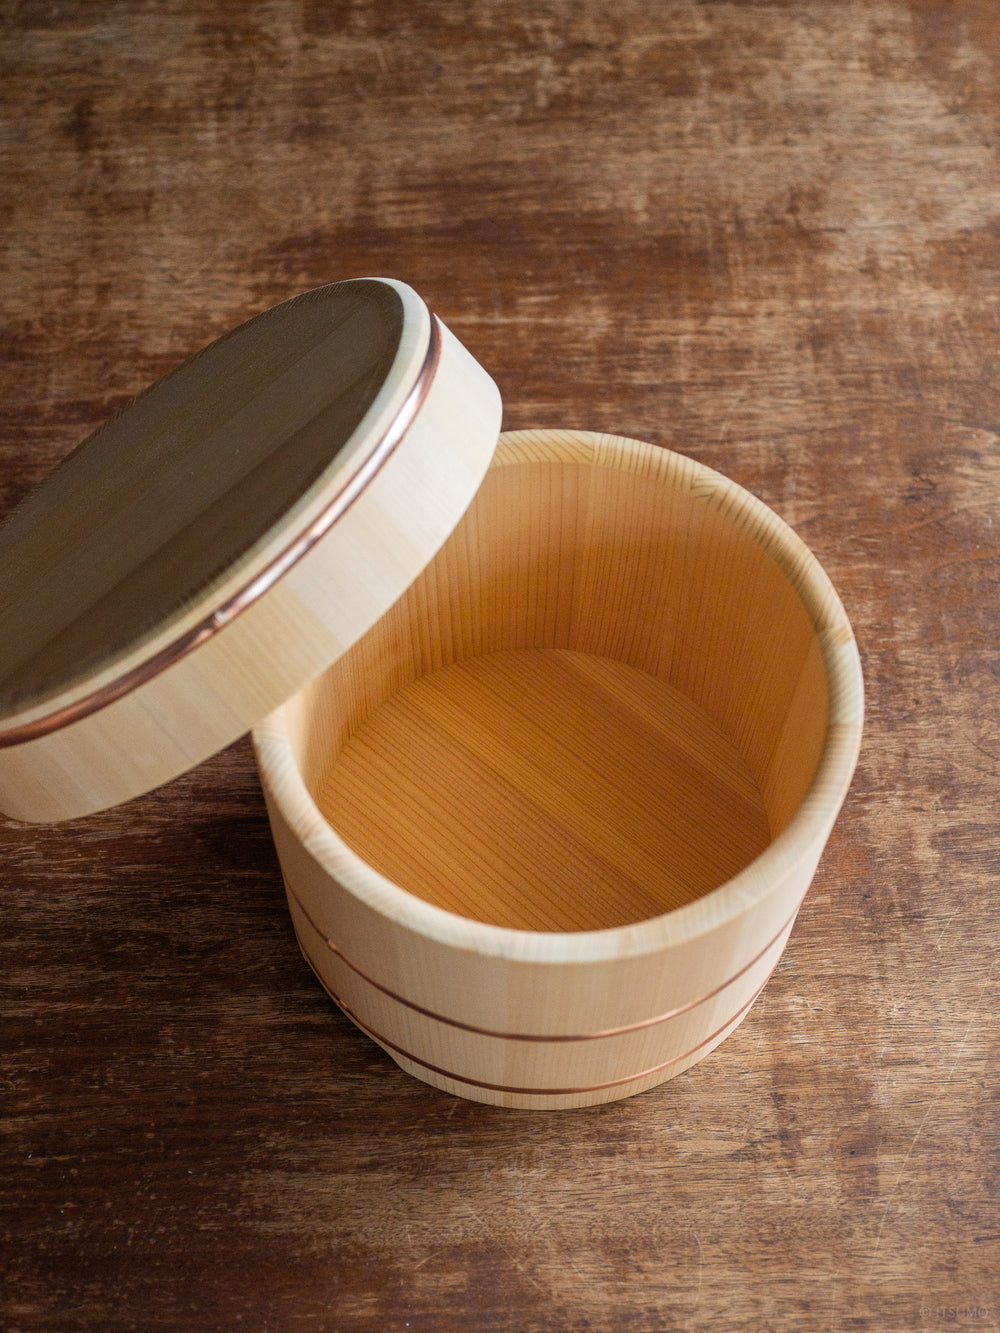 Kiso sawara ohitsu rice chest inside wood grain with lid off